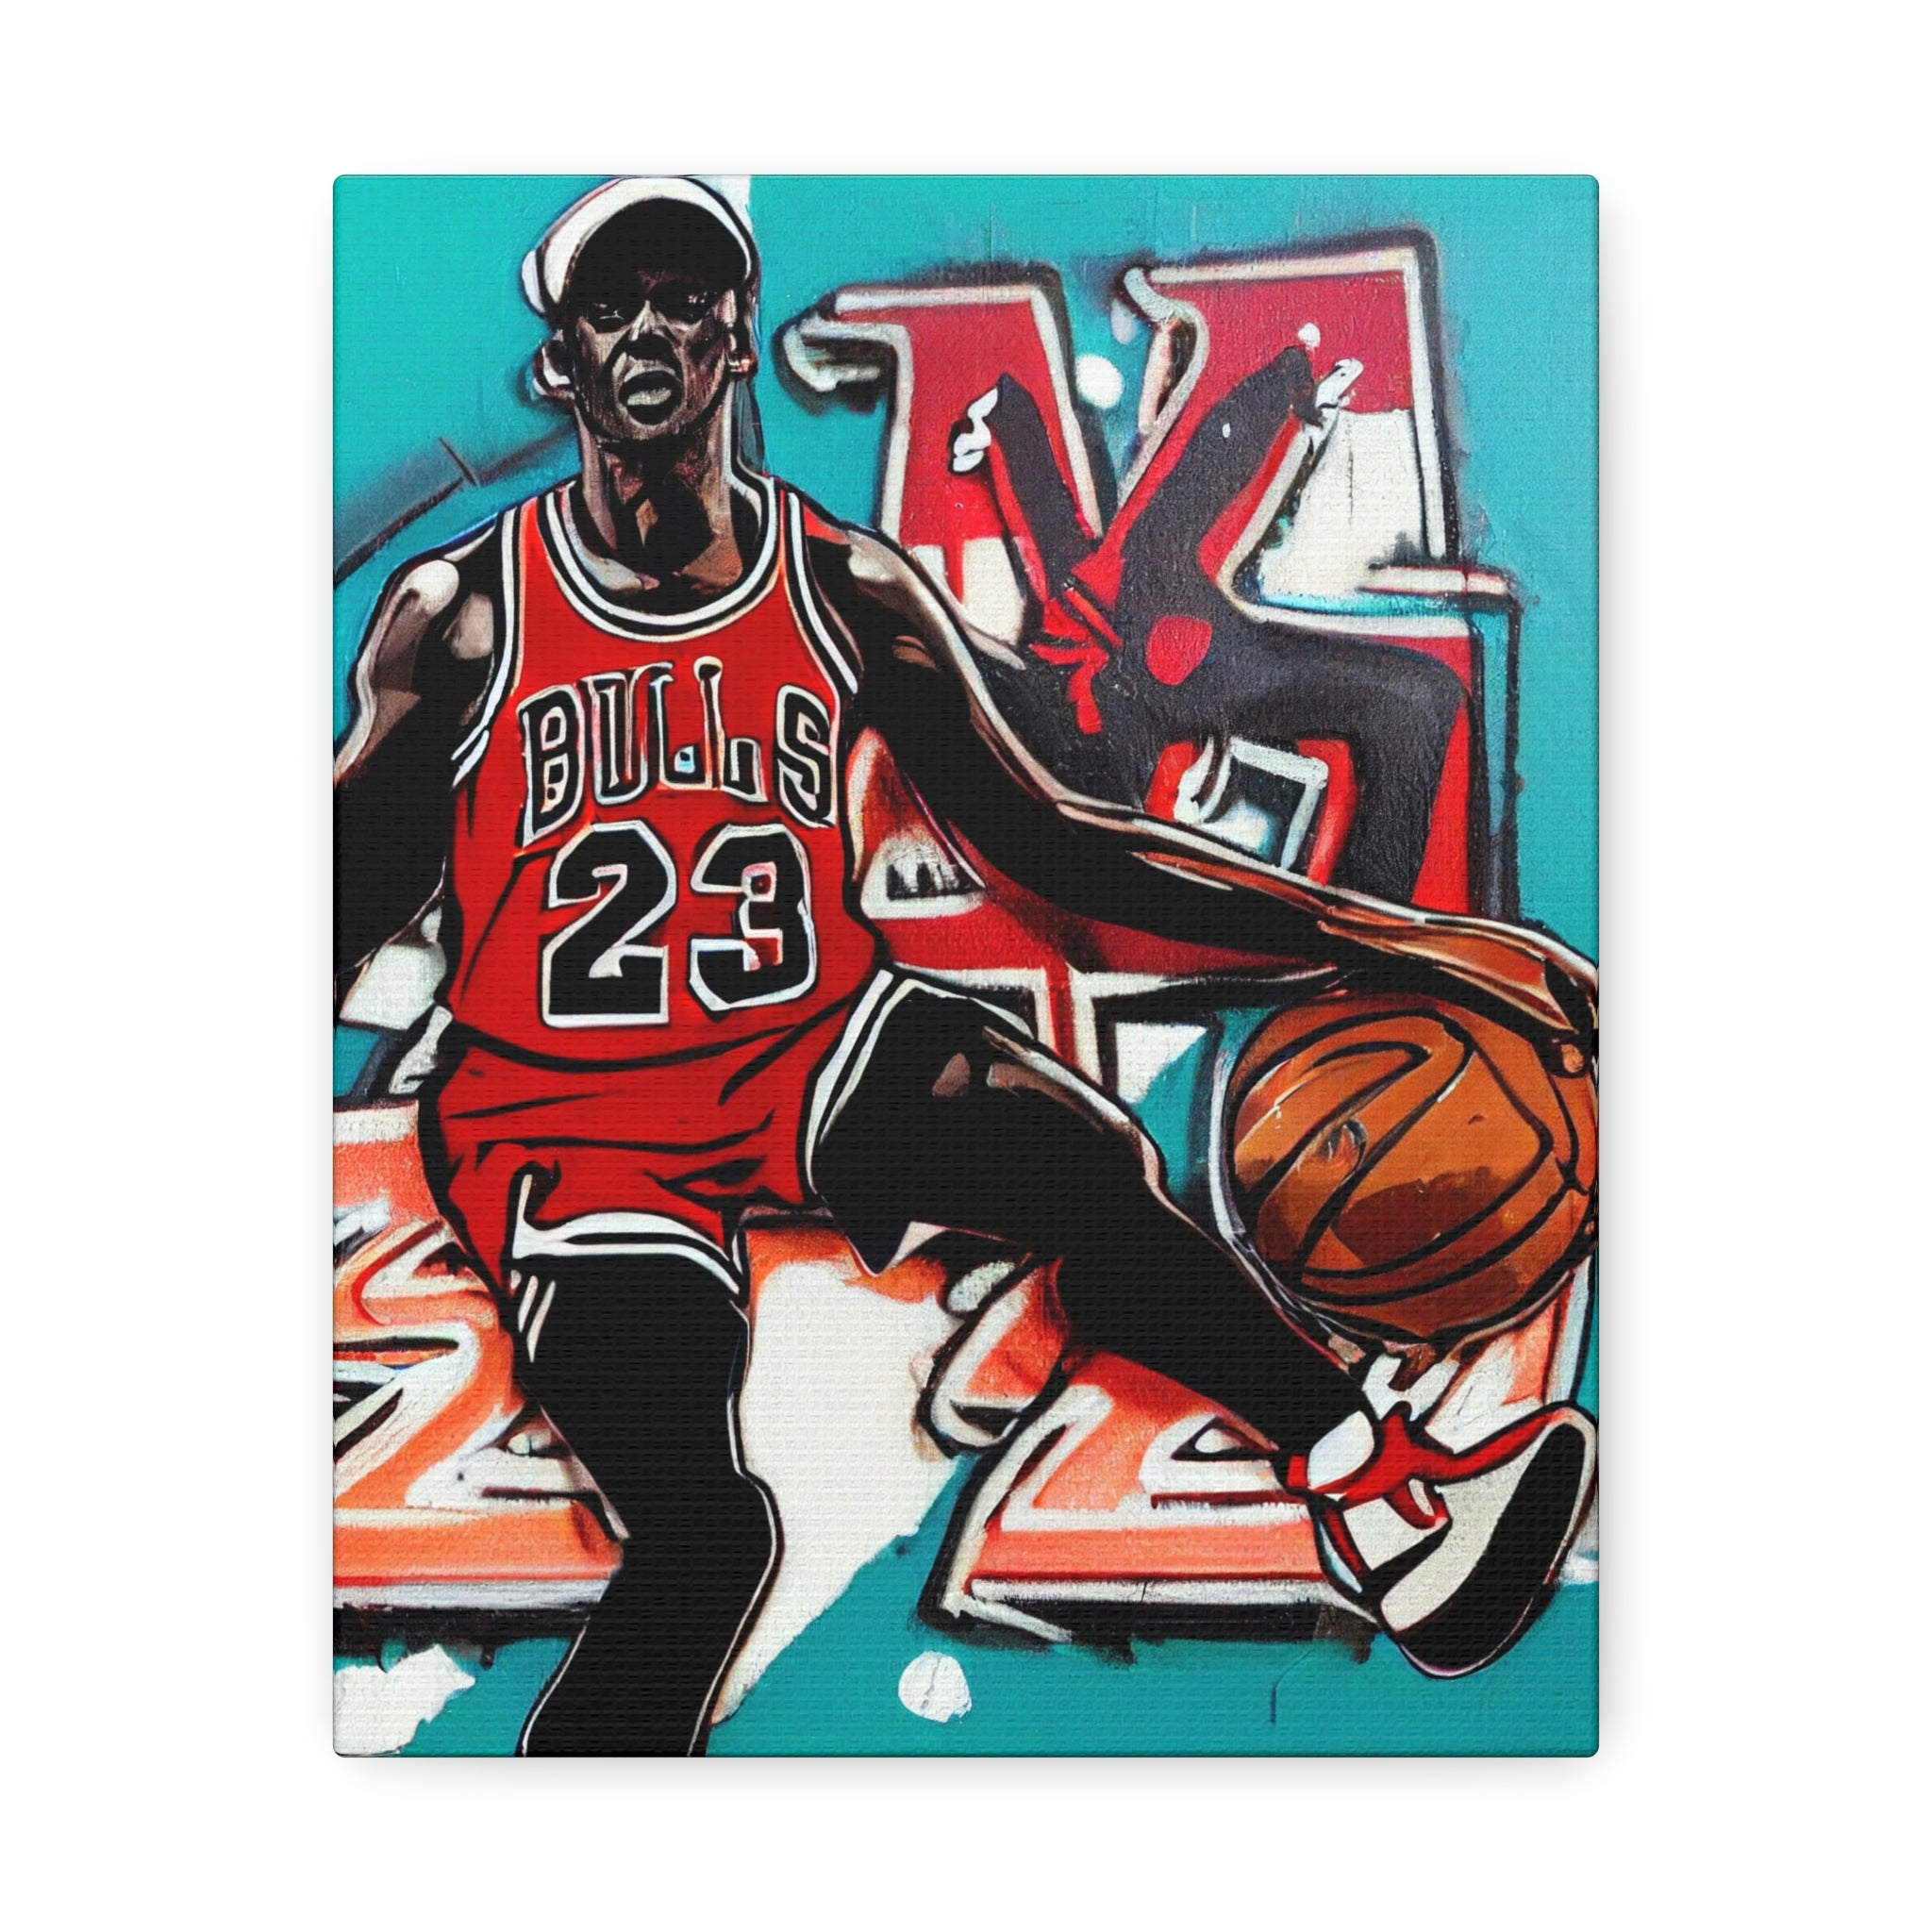 Michael J. Playing Basketball Canvas Pop Art - Wall Art - By Witzenberg Sneakers Sale Online